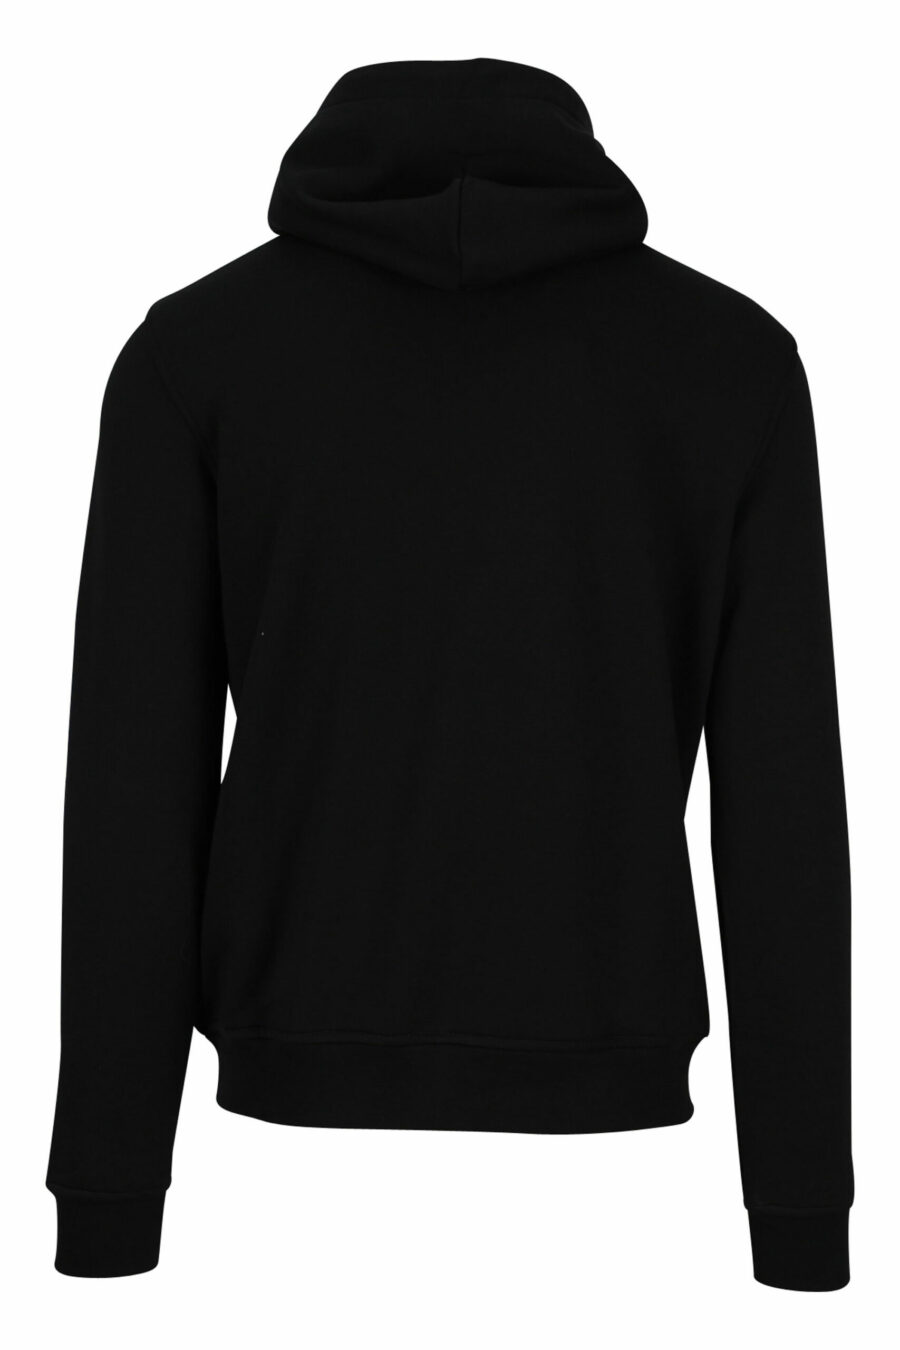 Black hooded sweatshirt with monochrome rubber mini-logo - 4062226393577 3 scaled